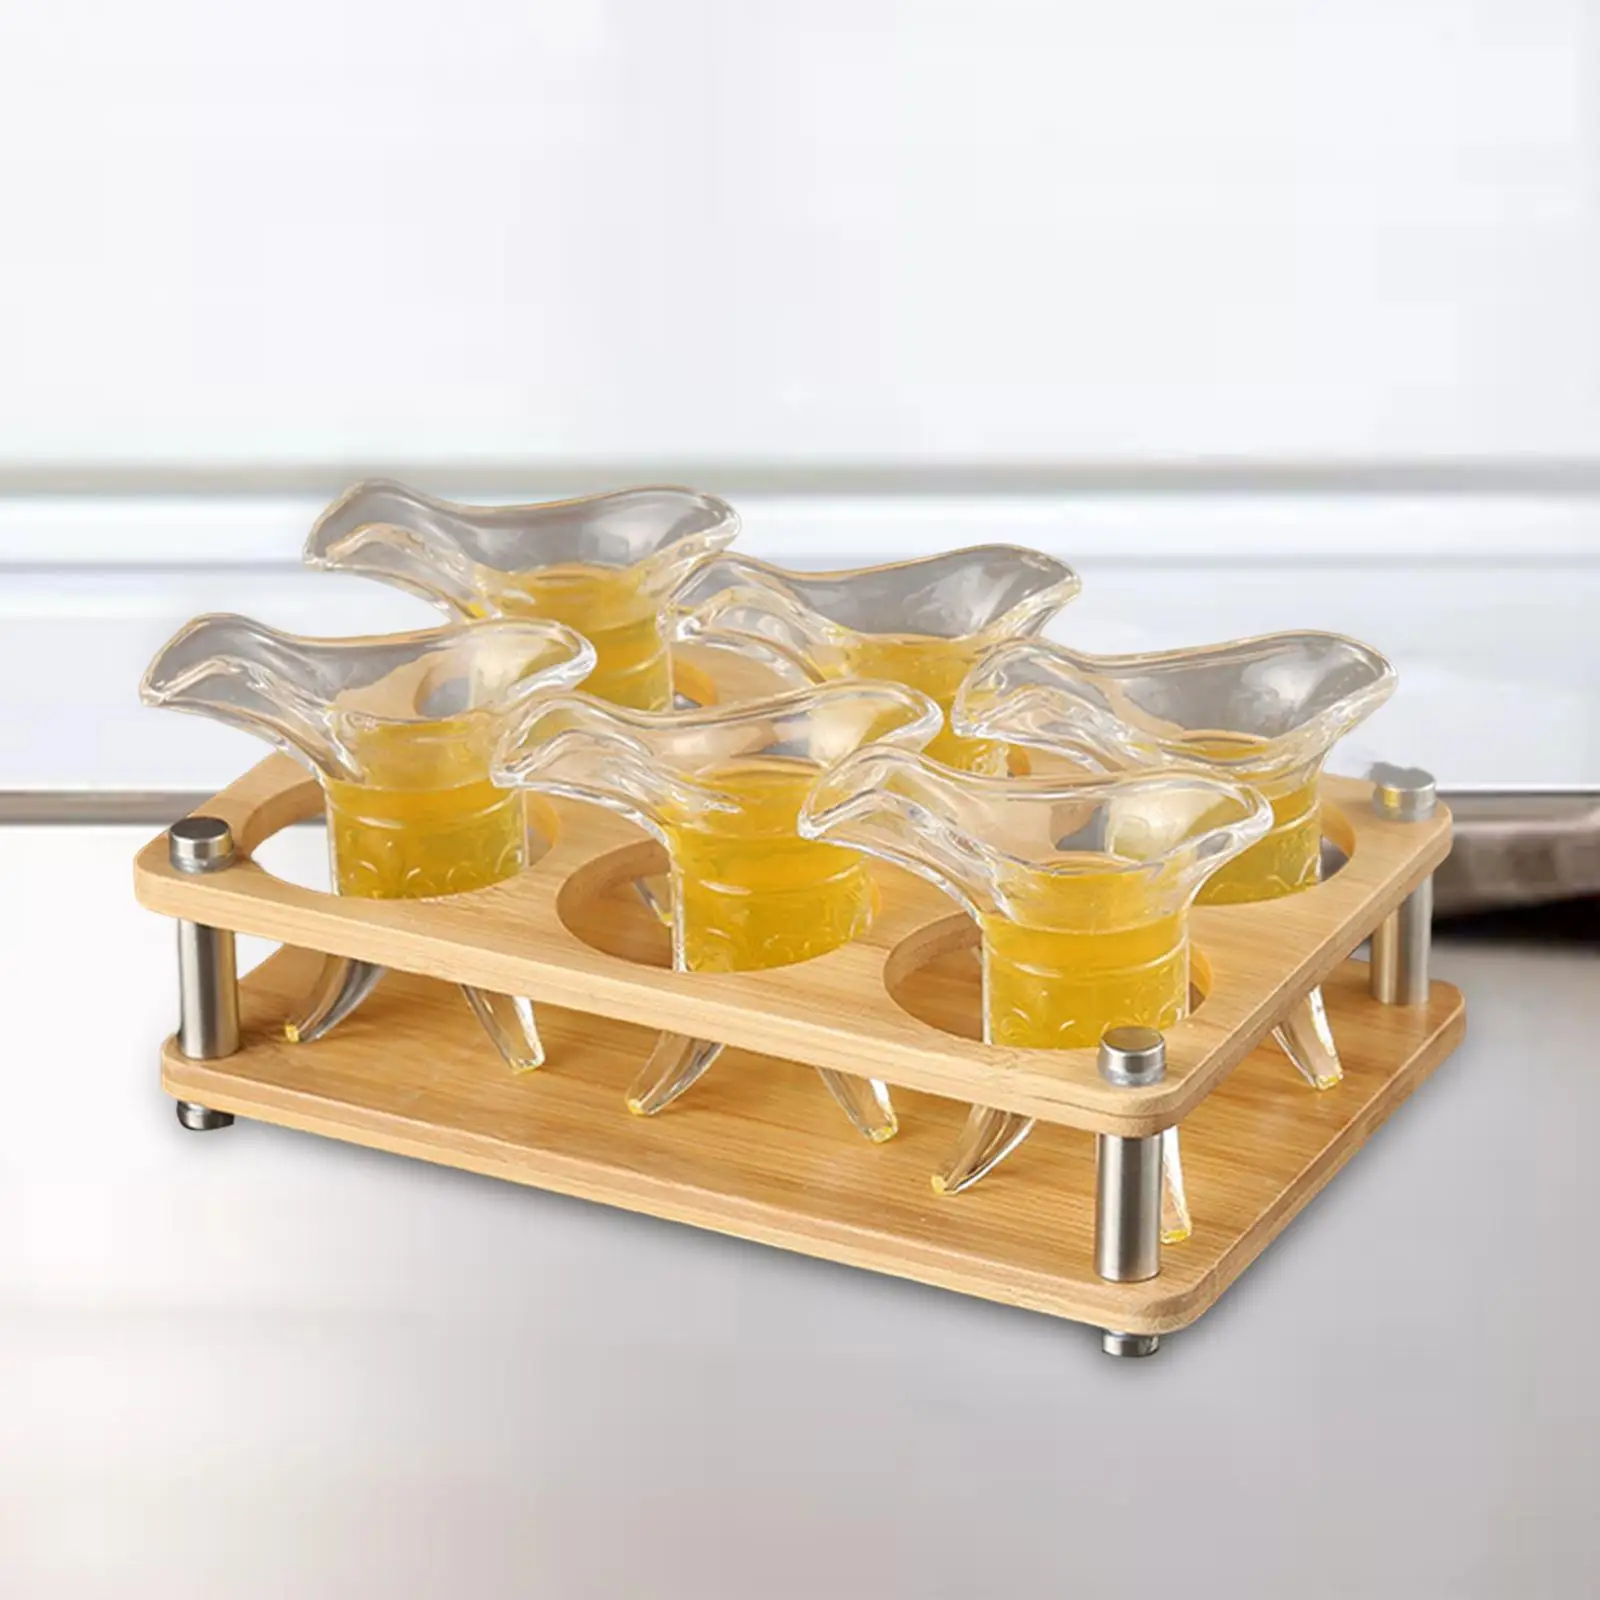 6 Holes Shot Glass Tray Holder Wooden Cup Rack Multifunction Durable Storage Carrier Mug Organizer for Restaurant Home Nightclub